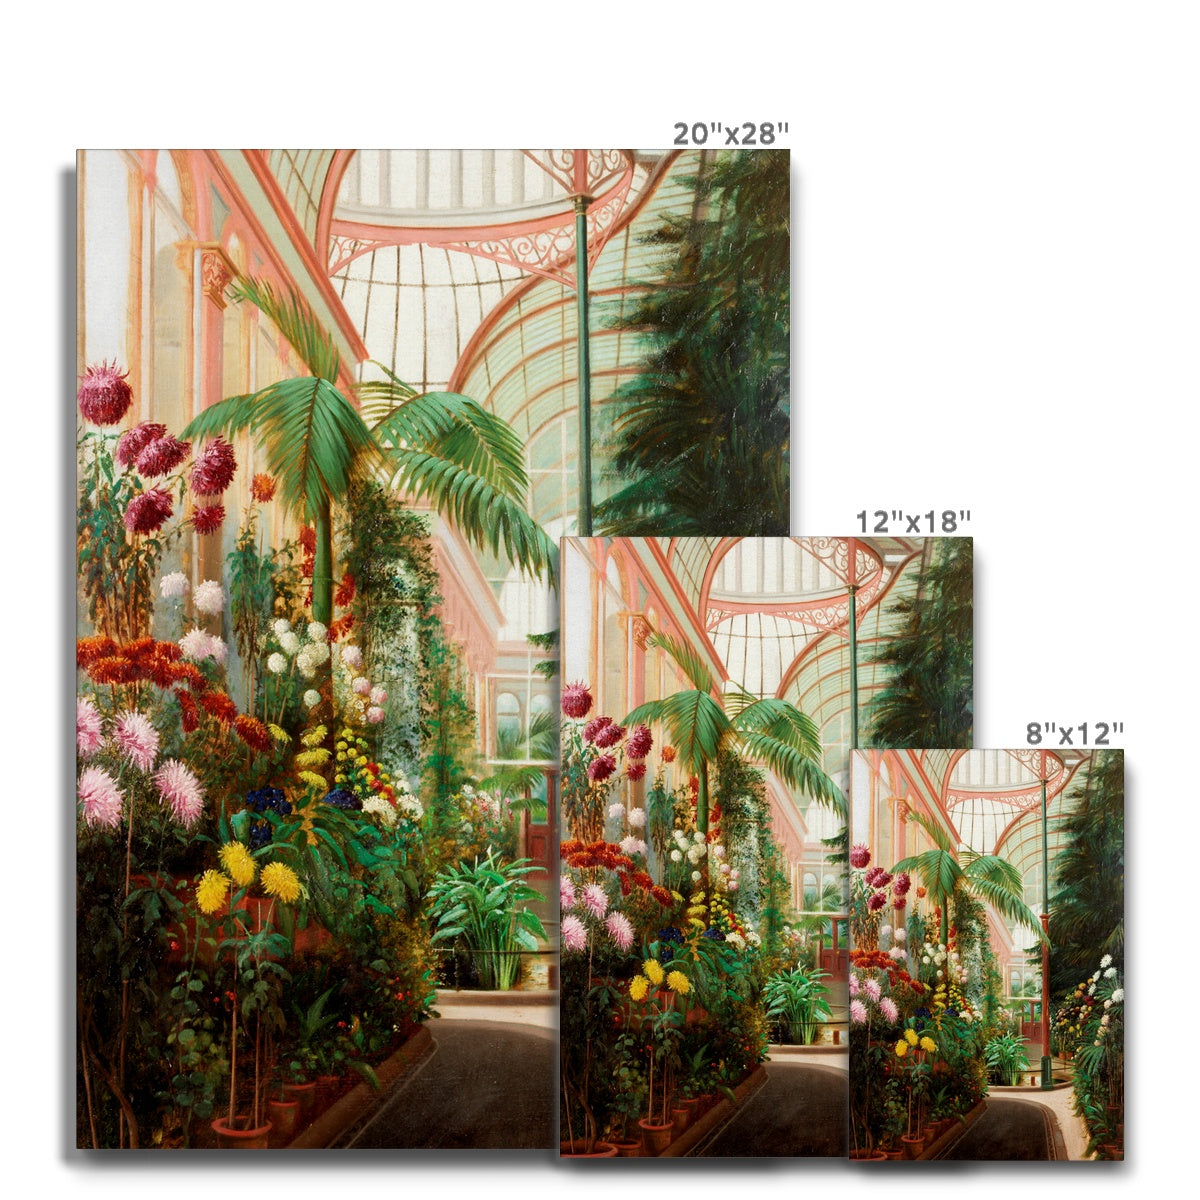 Printed Canvas - Sunderland Winter Gardens Interior by Daniel Marshall